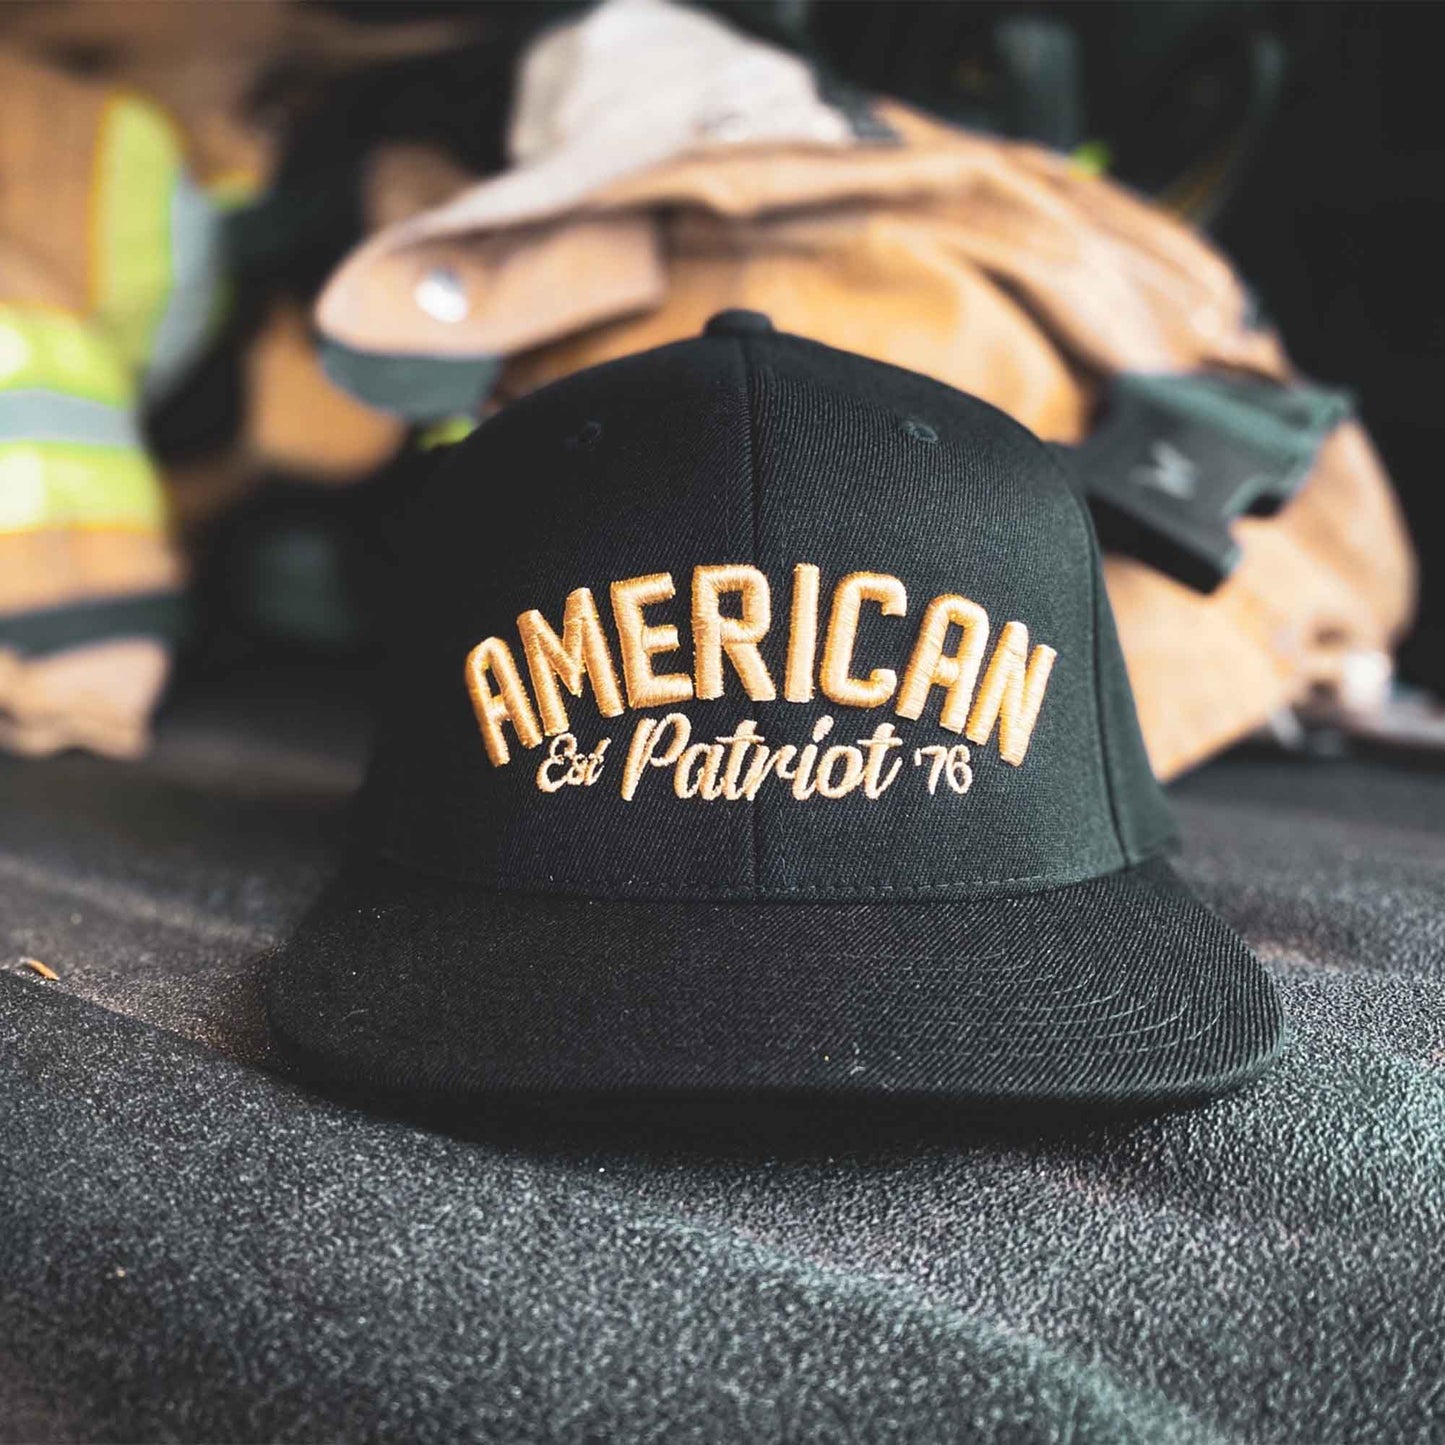 American Patriot Hat